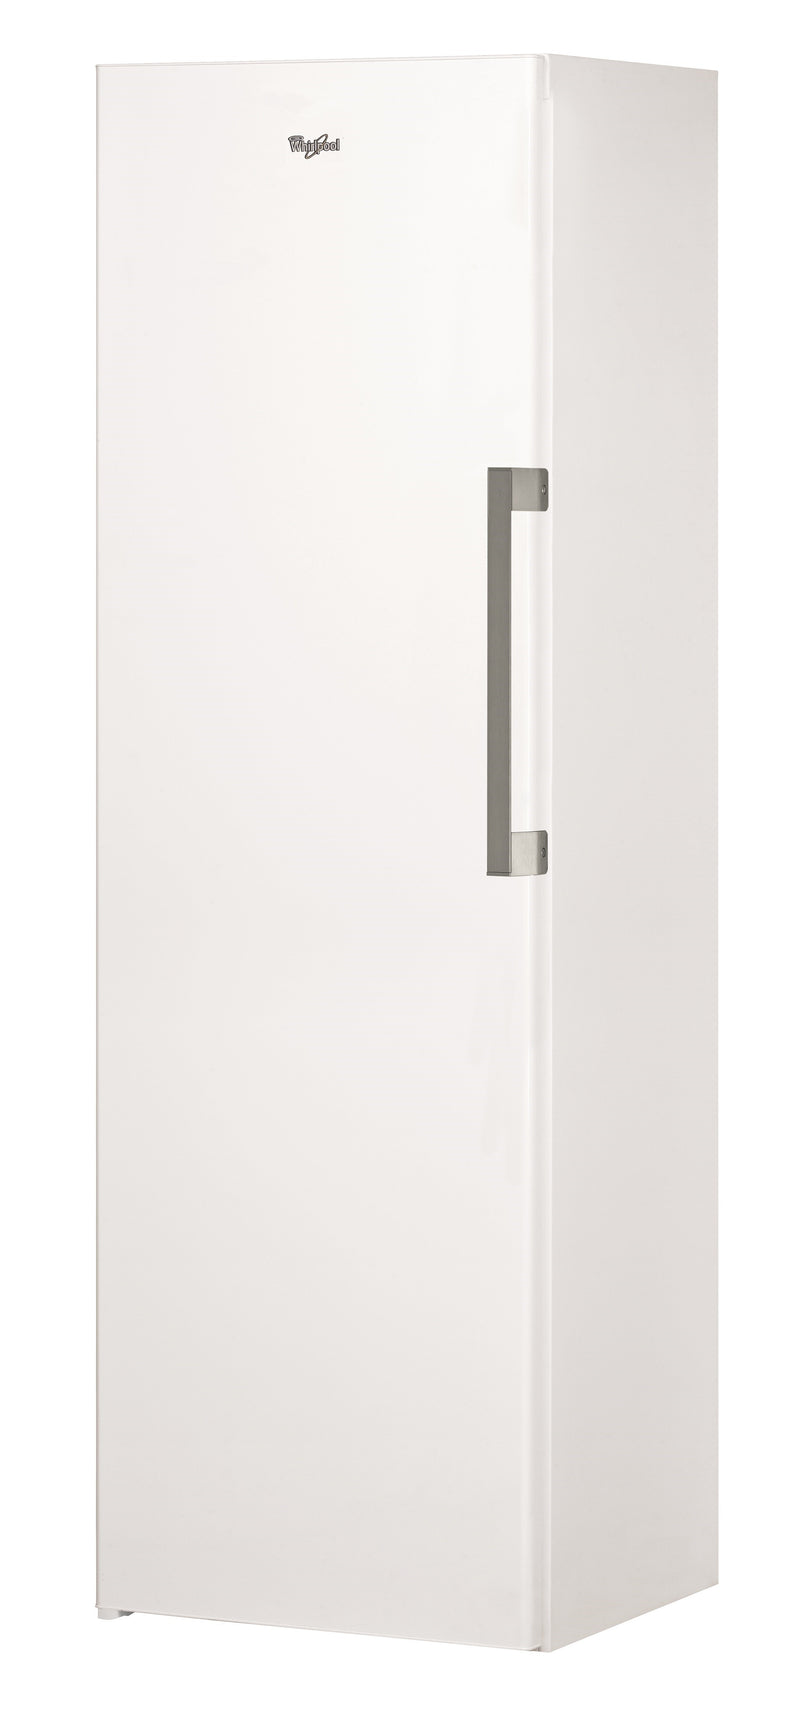 All Freezer 60cm Frost-free A++ 291Lit White